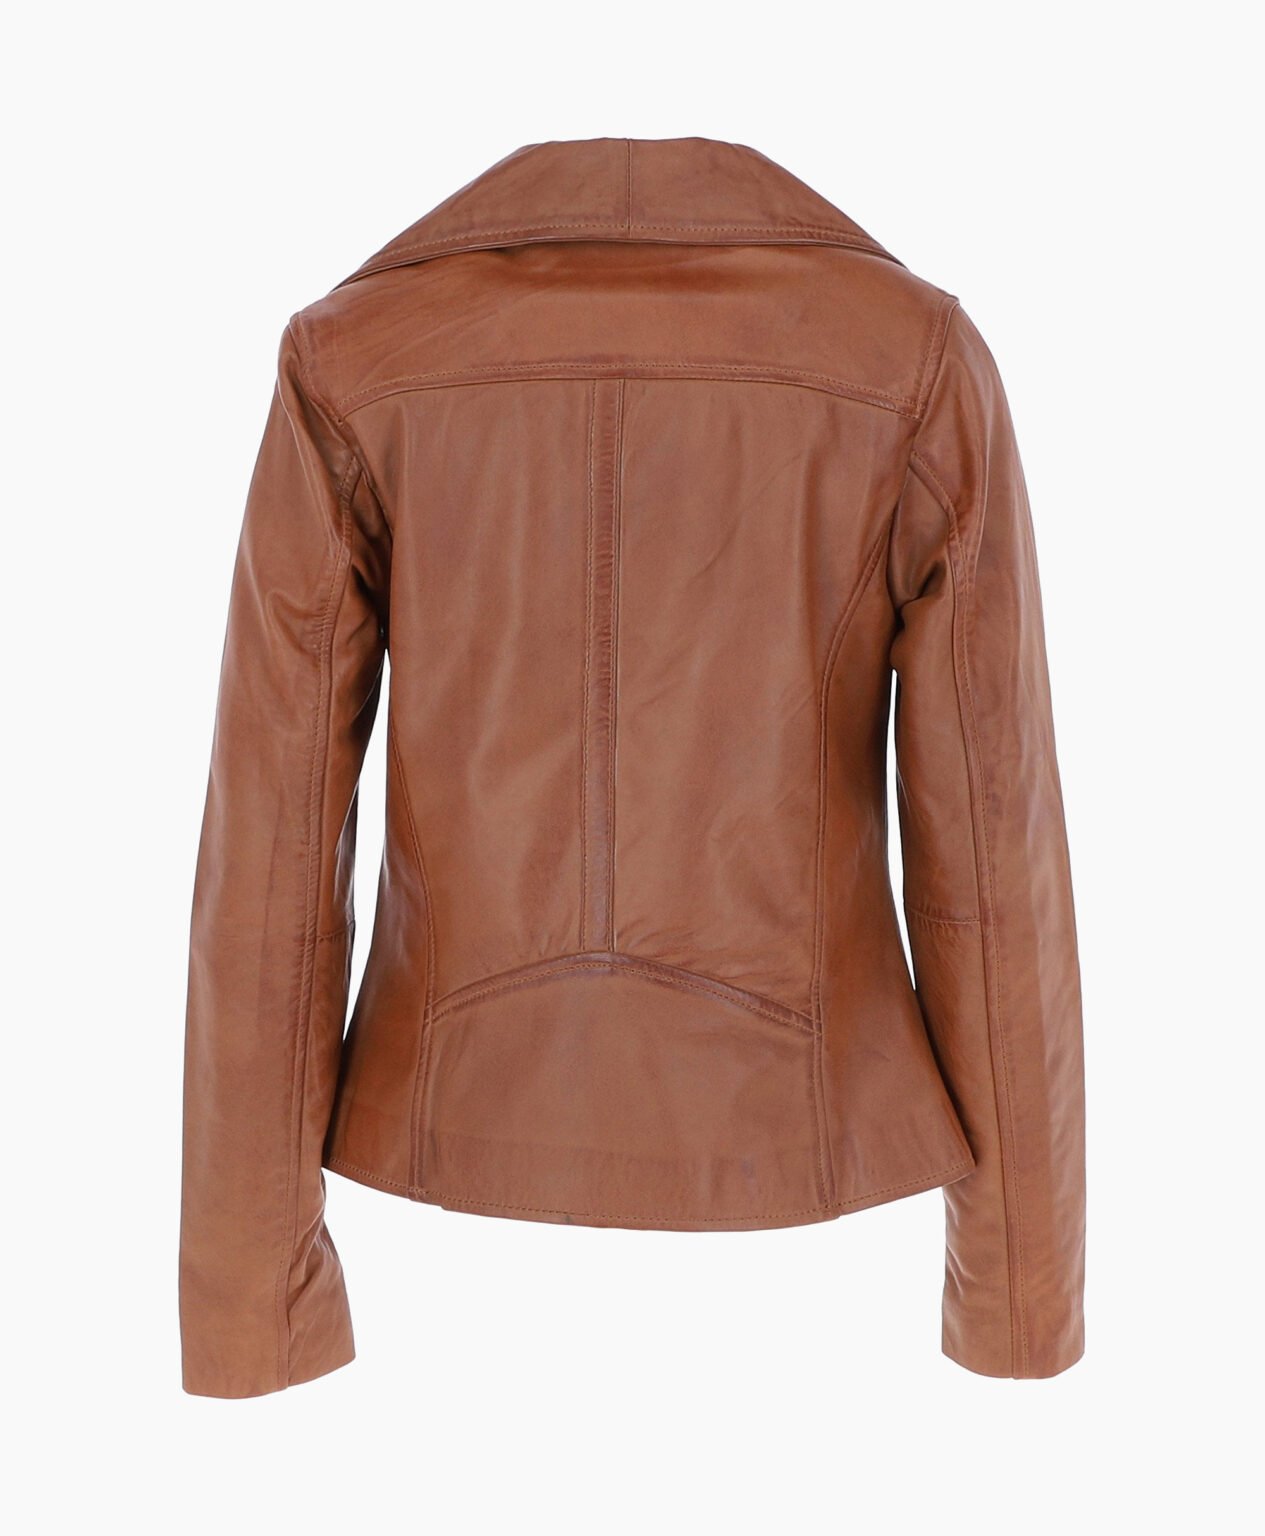 vogue-jacket-leather-jacket-fashion-collar-tan-shelby-image202